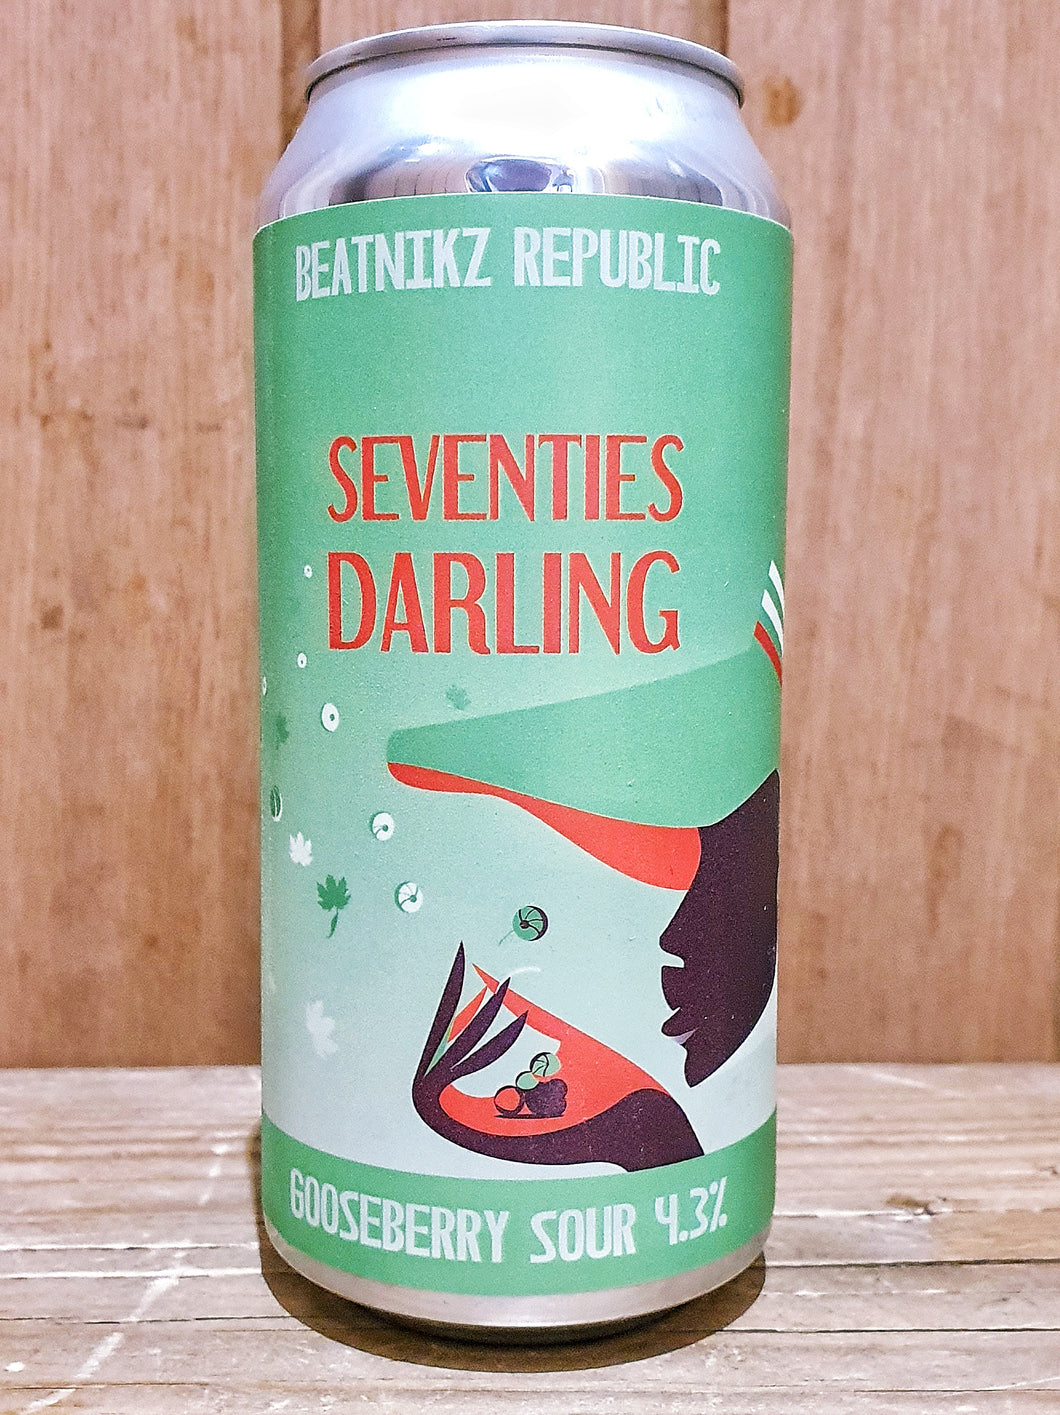 Beatnikz Republic - Seventies Darling